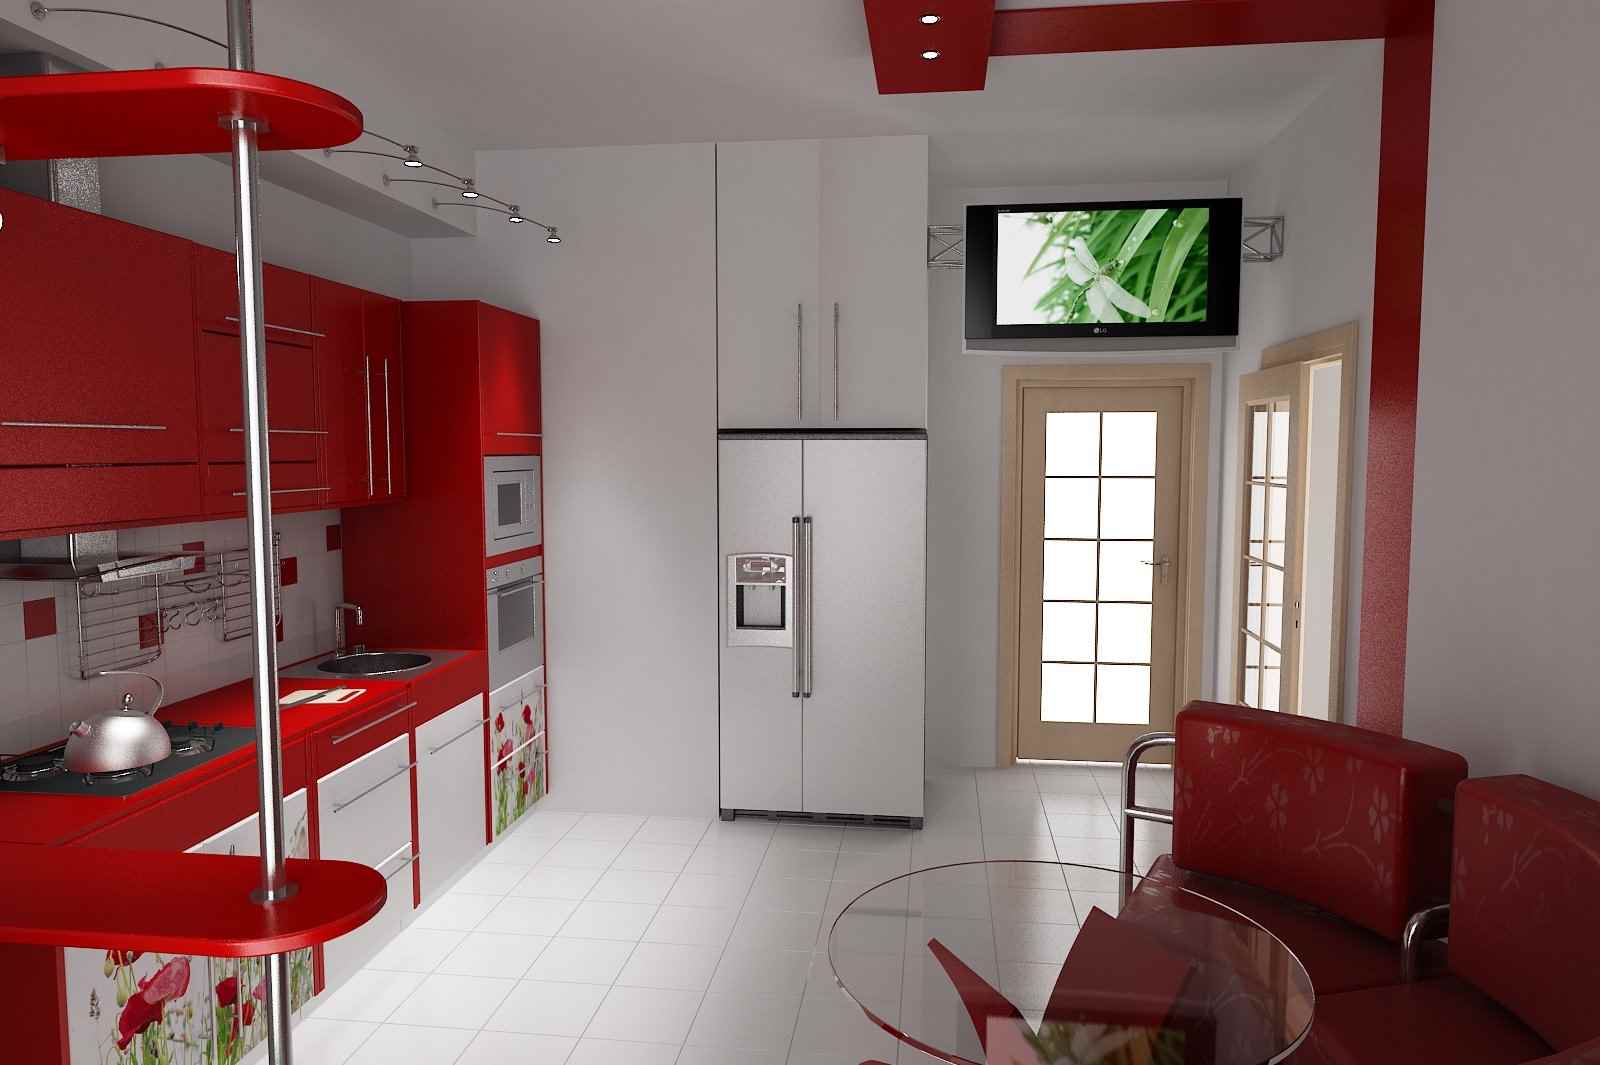 l'idée d'un design inhabituel de la cuisine est de 11 m²